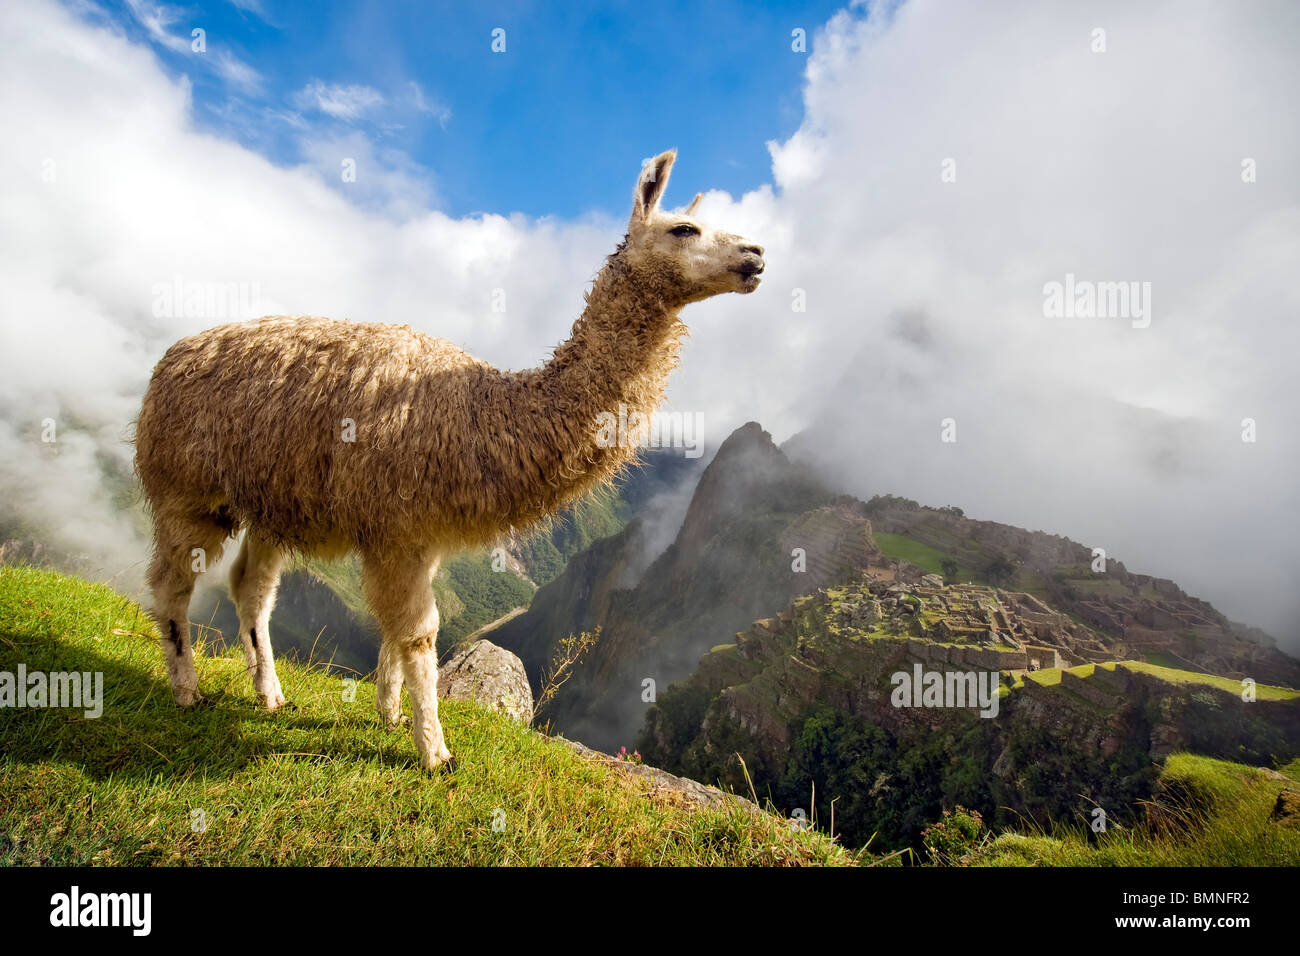 Landscape of Machu Picchu, Peru, with llama in foreground. Stock Photo